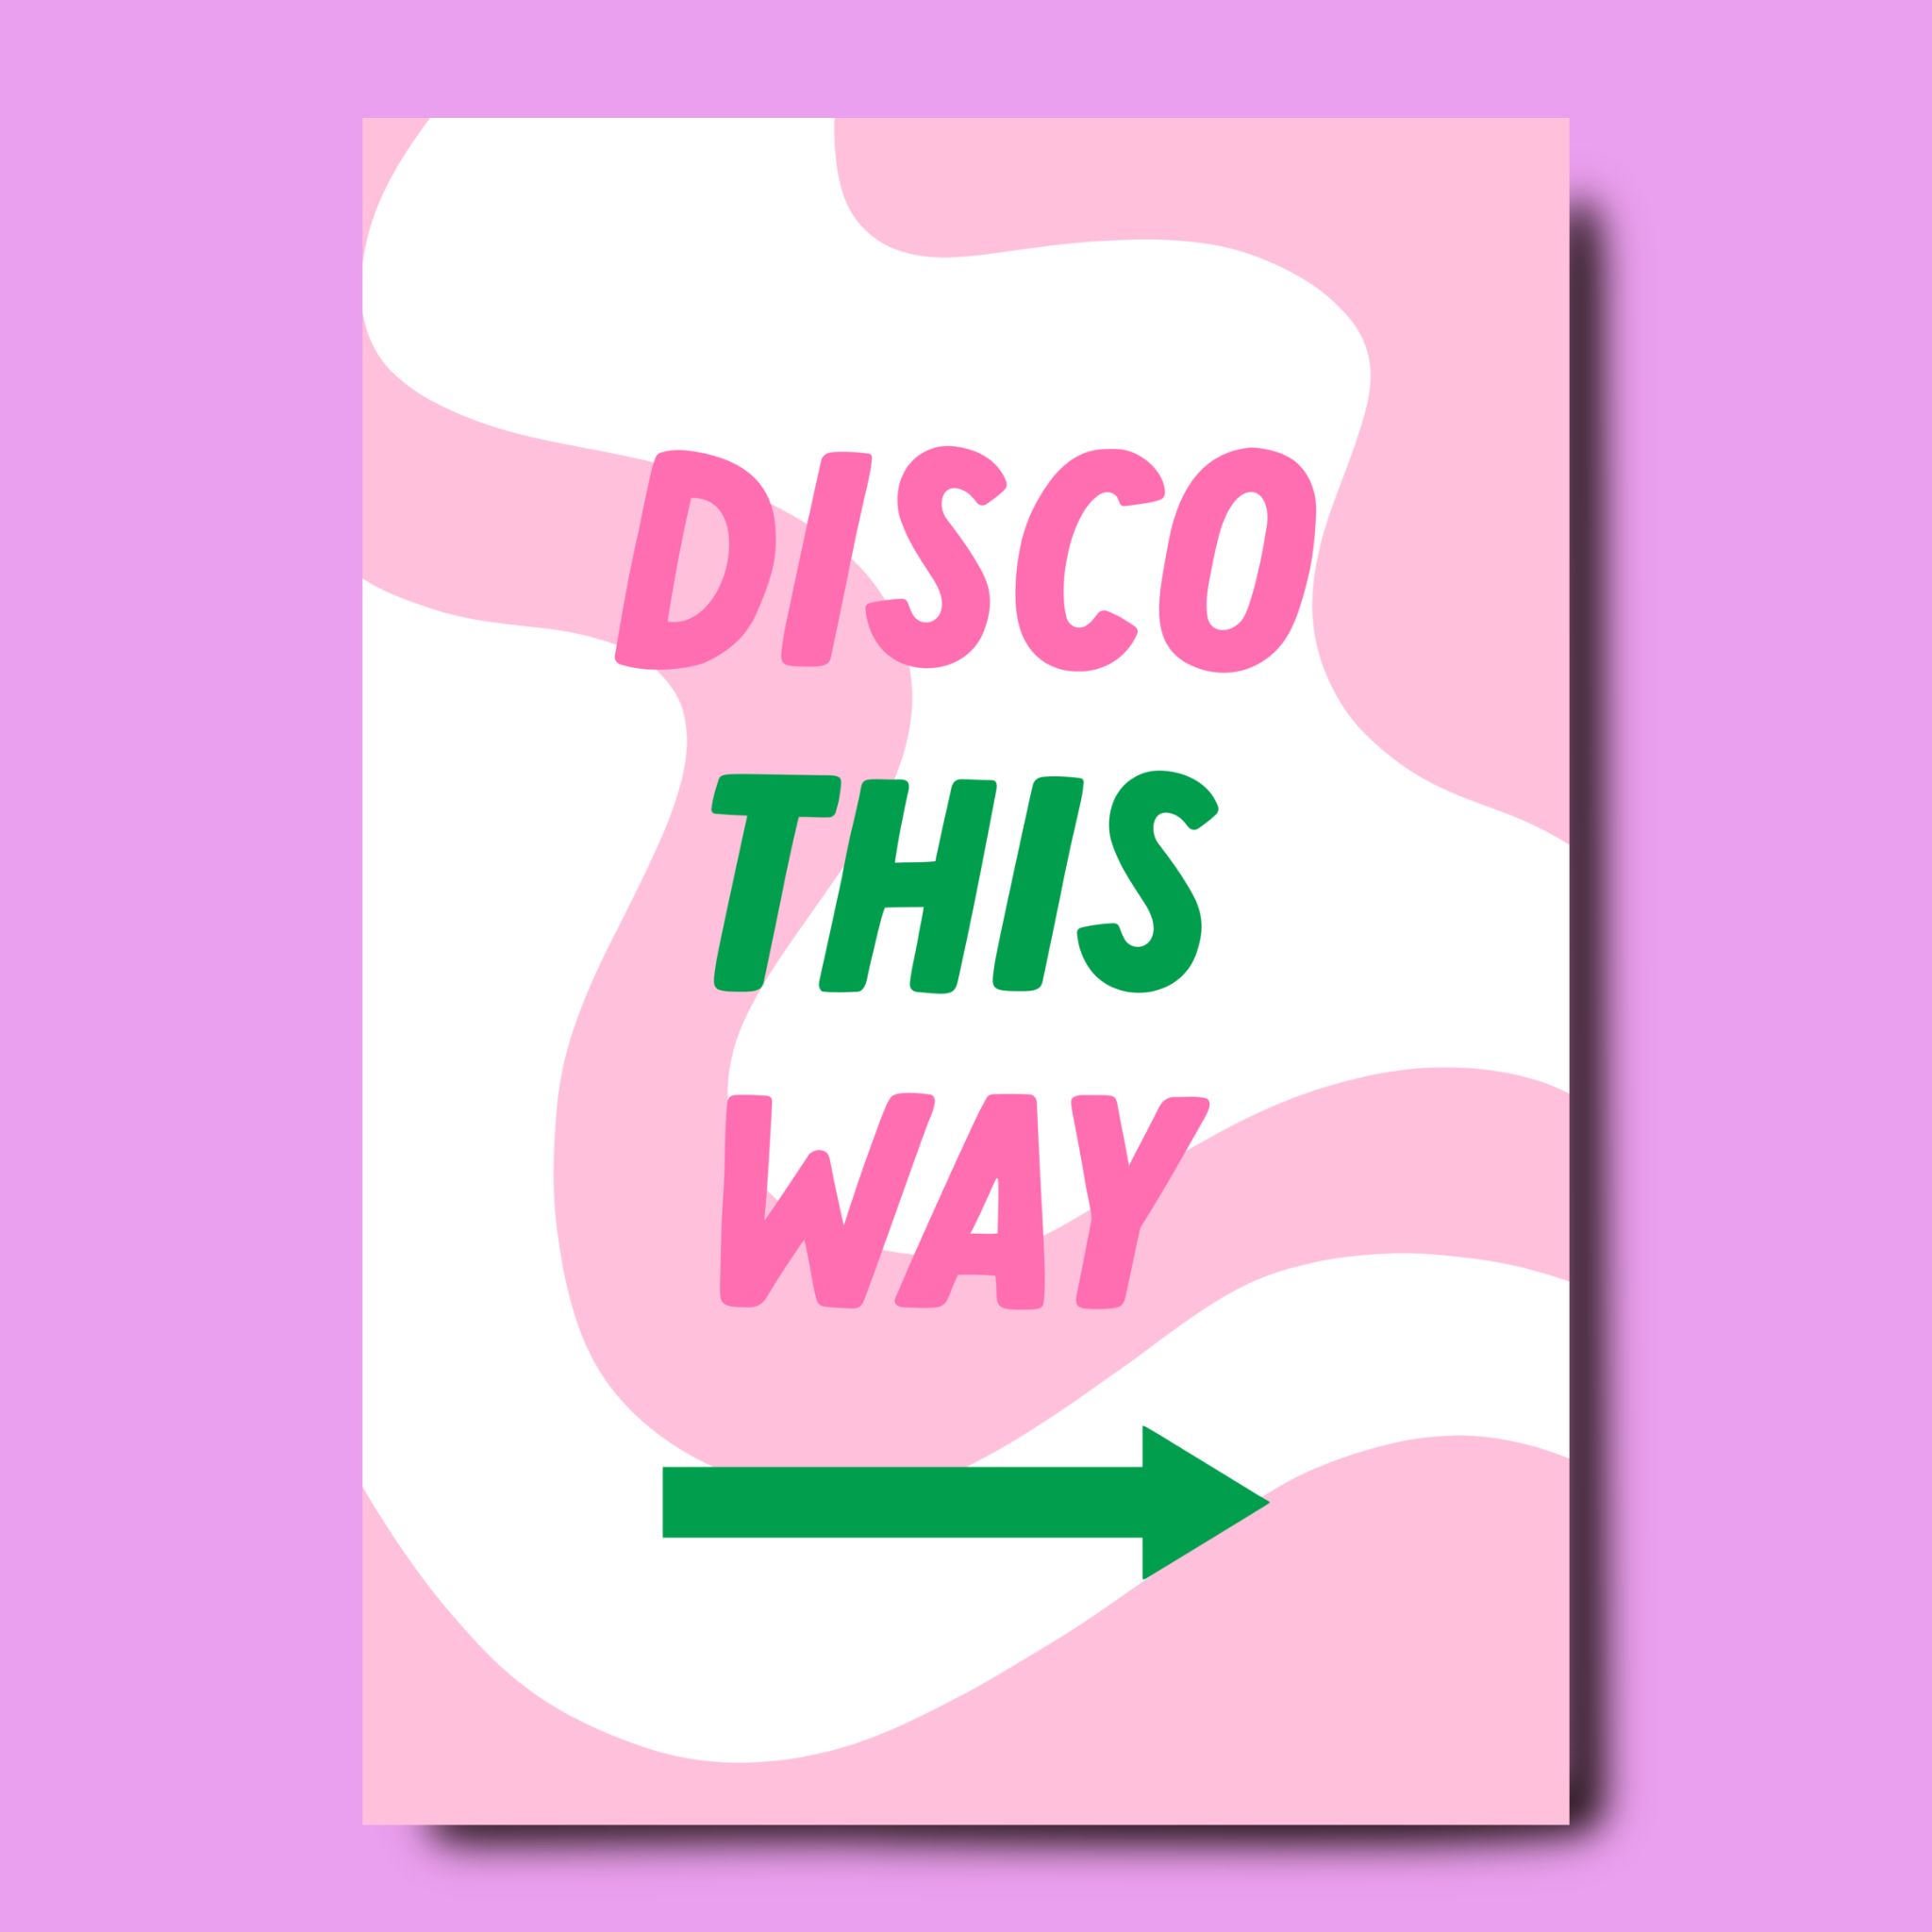 Disco this way – Pink print